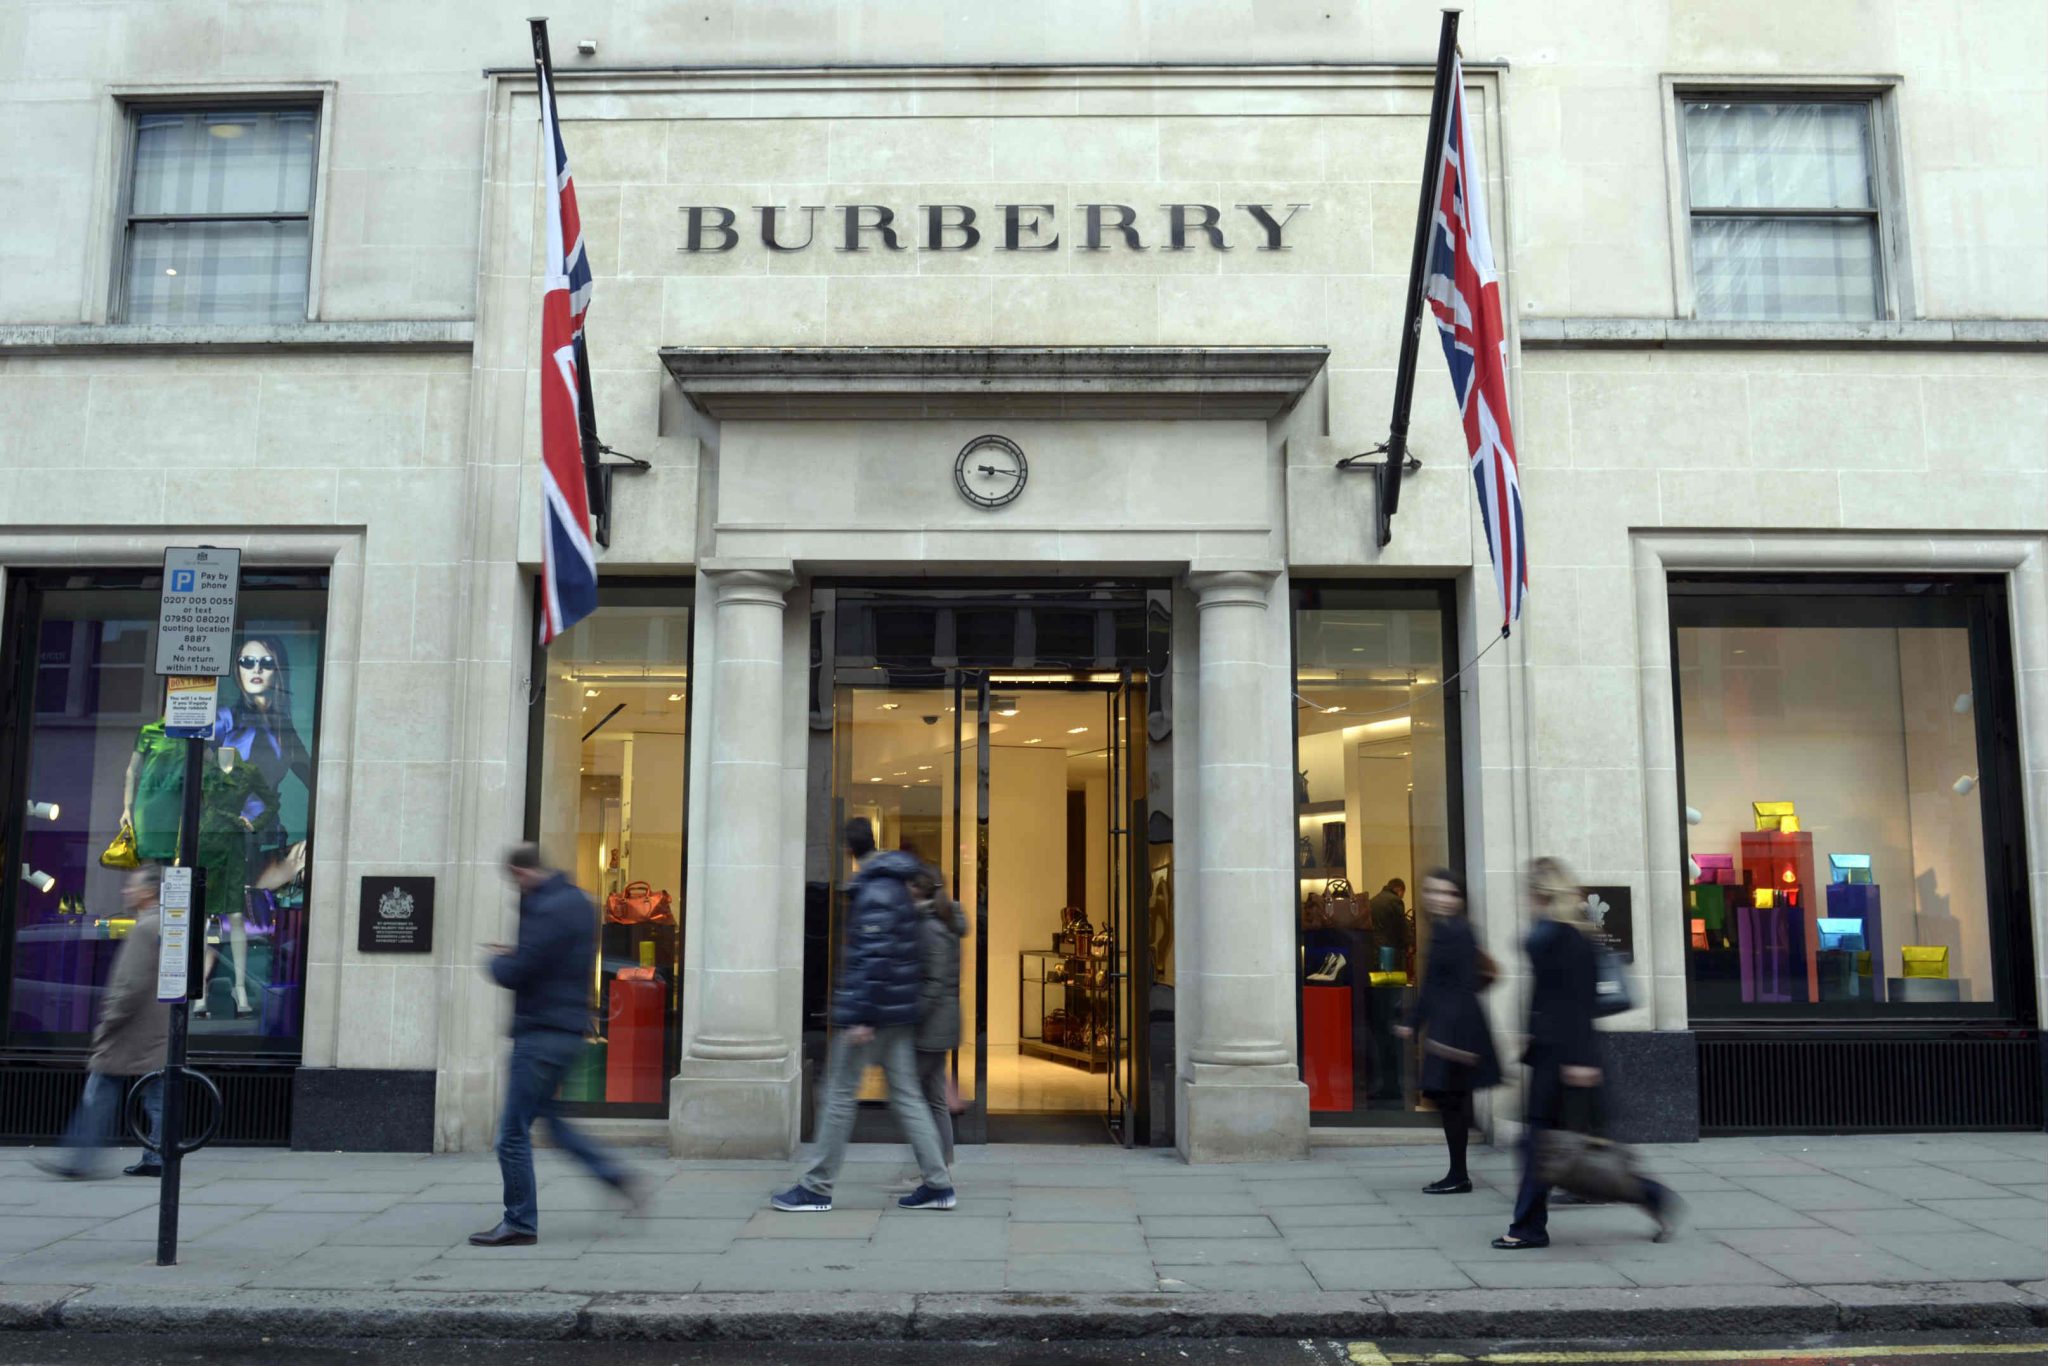 burberry shop online